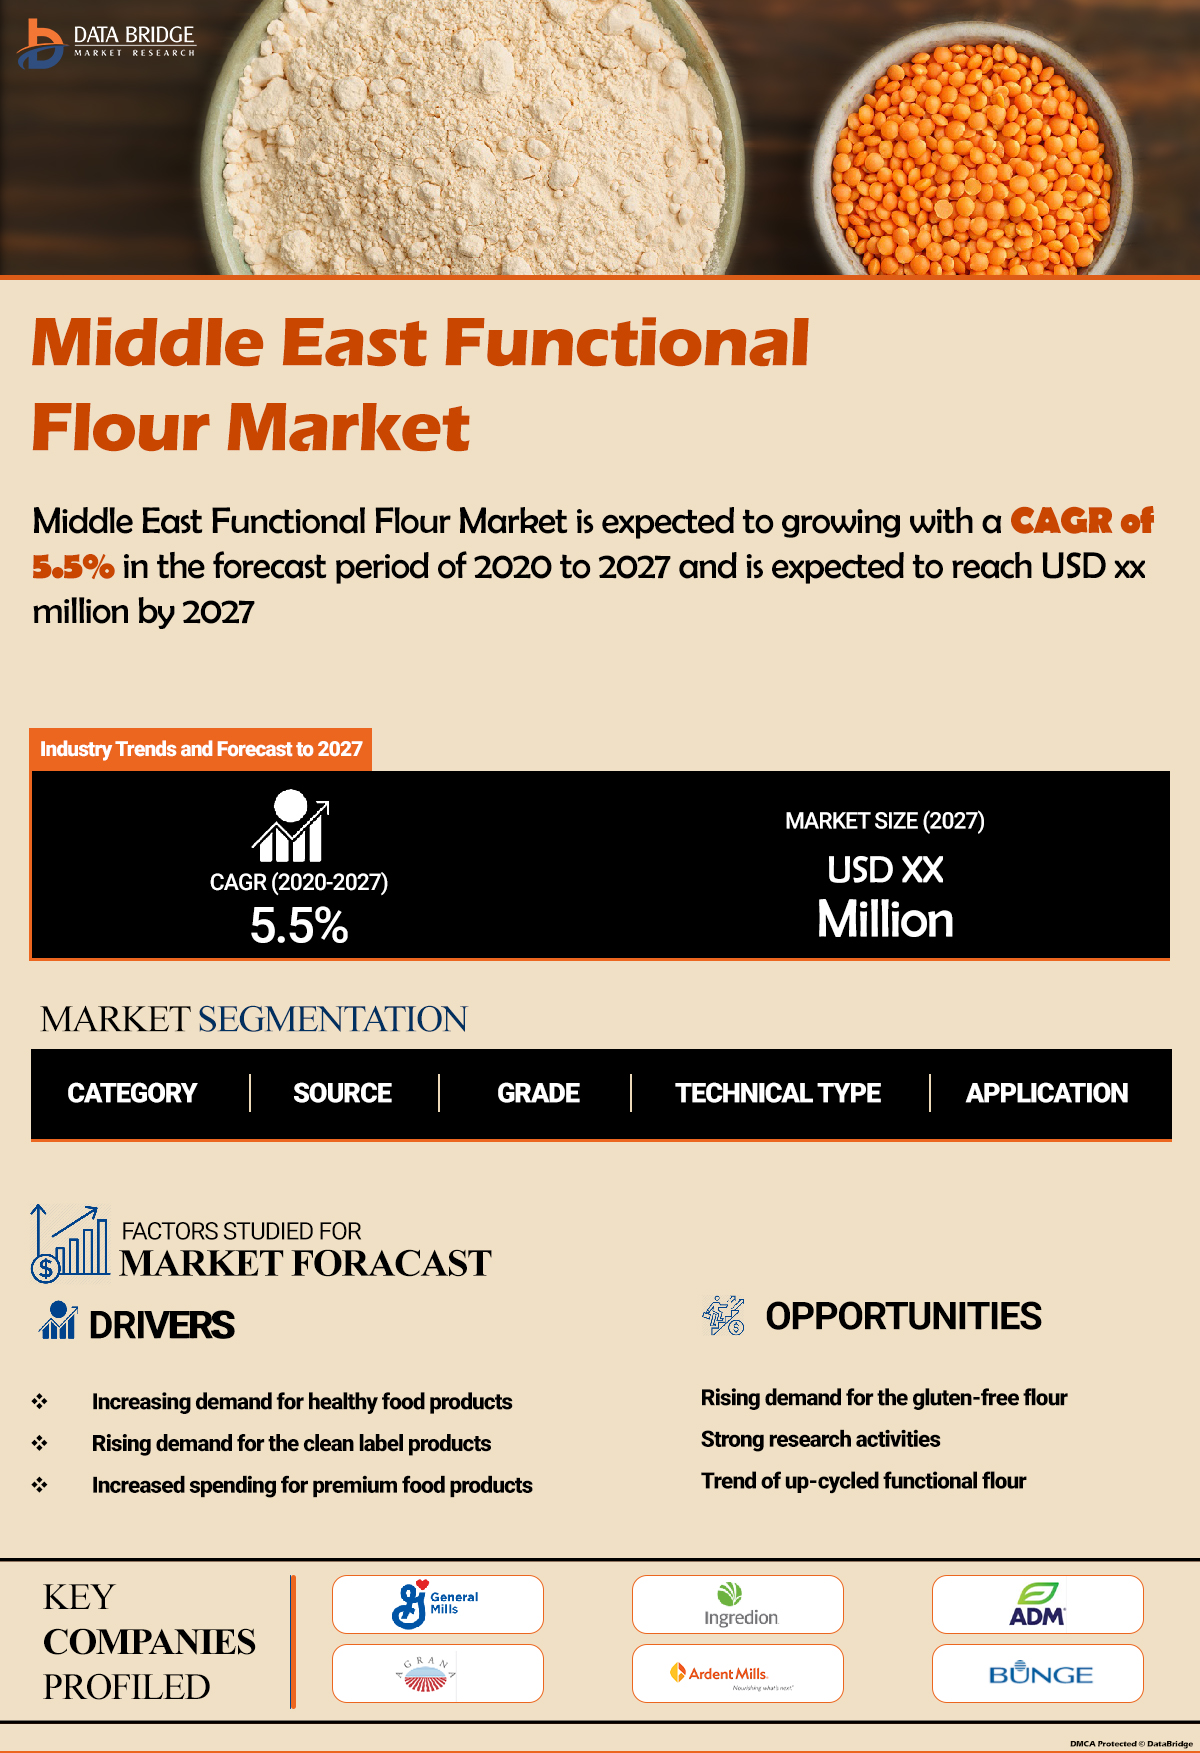 Middle East Functional Flour Market